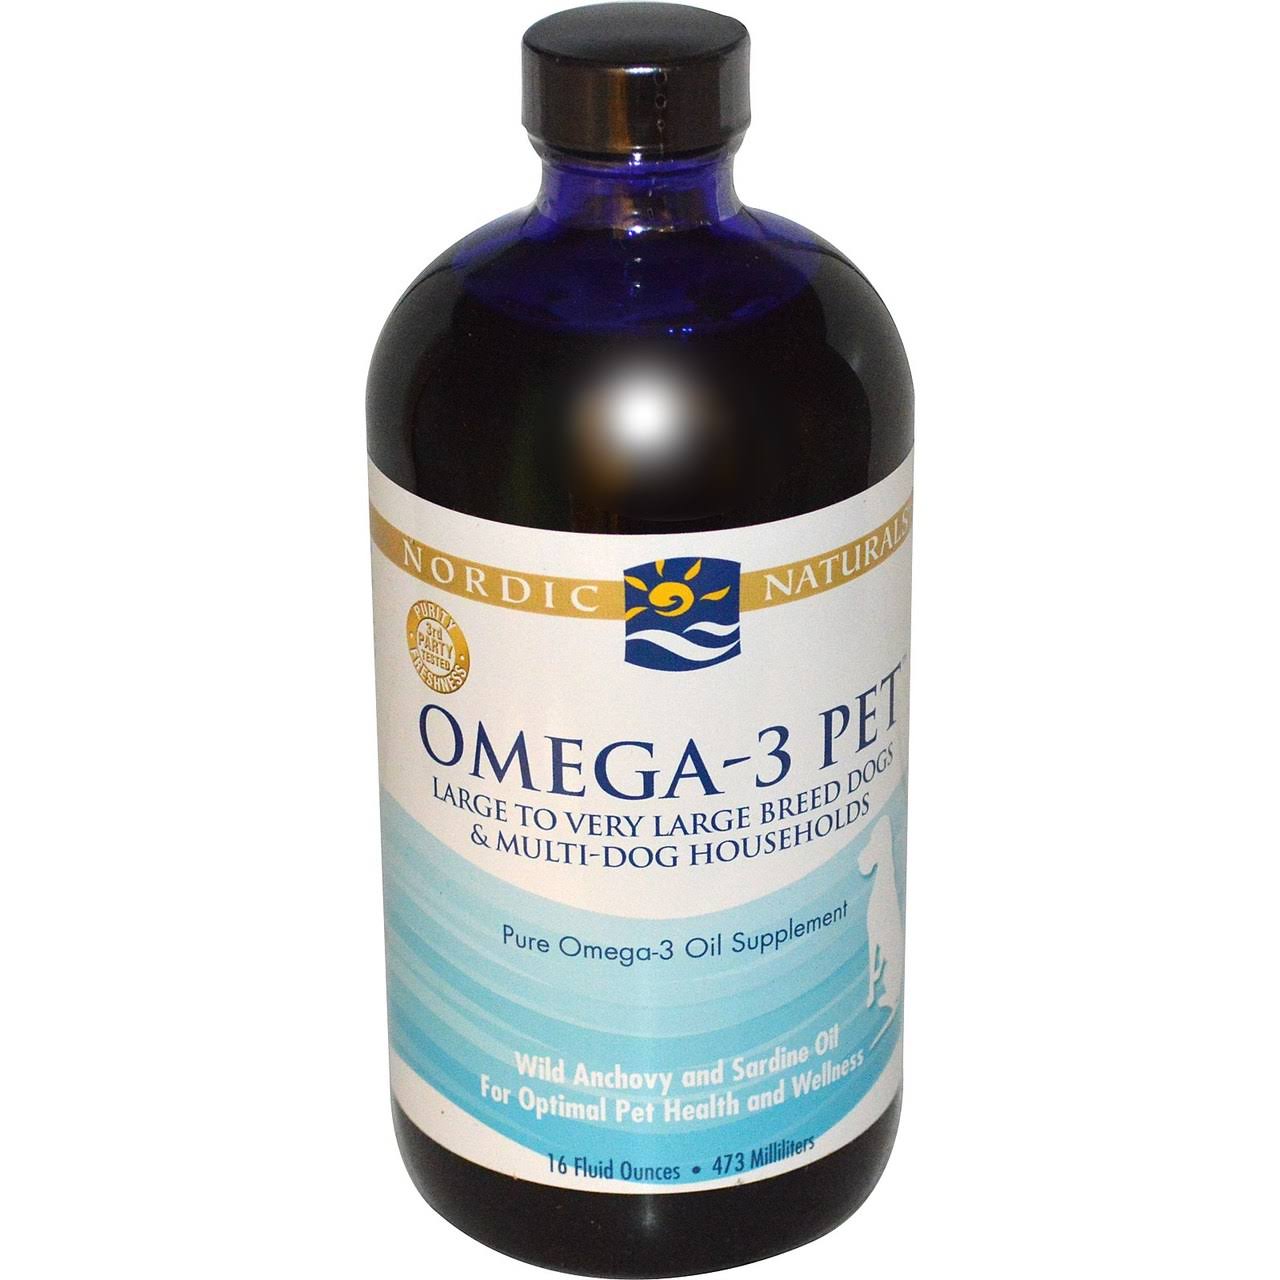 Nordic Naturals Omega-3 Pet Pure Omega 3 Oil Supplement - 473ml